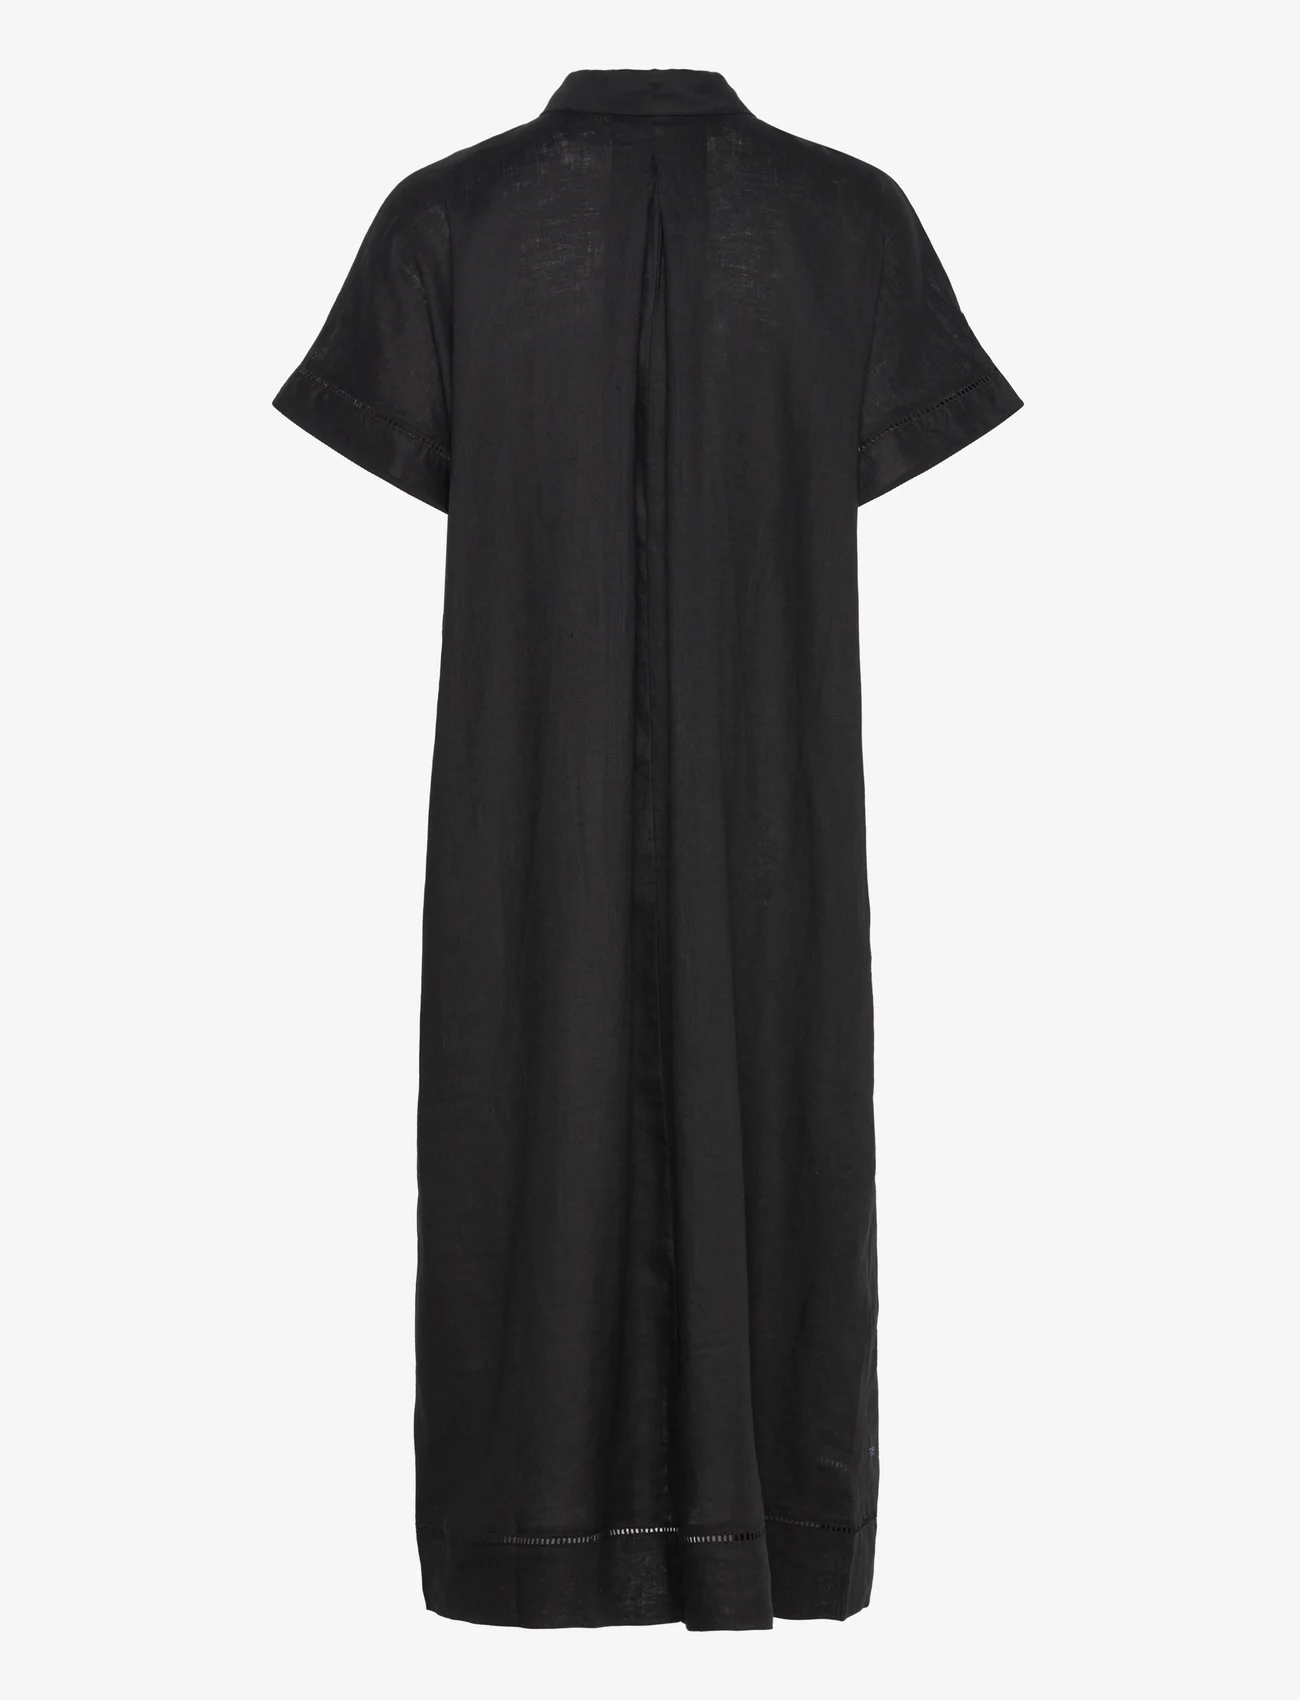 Lindex - Dress Laila pure linen - skjortklänningar - black - 1